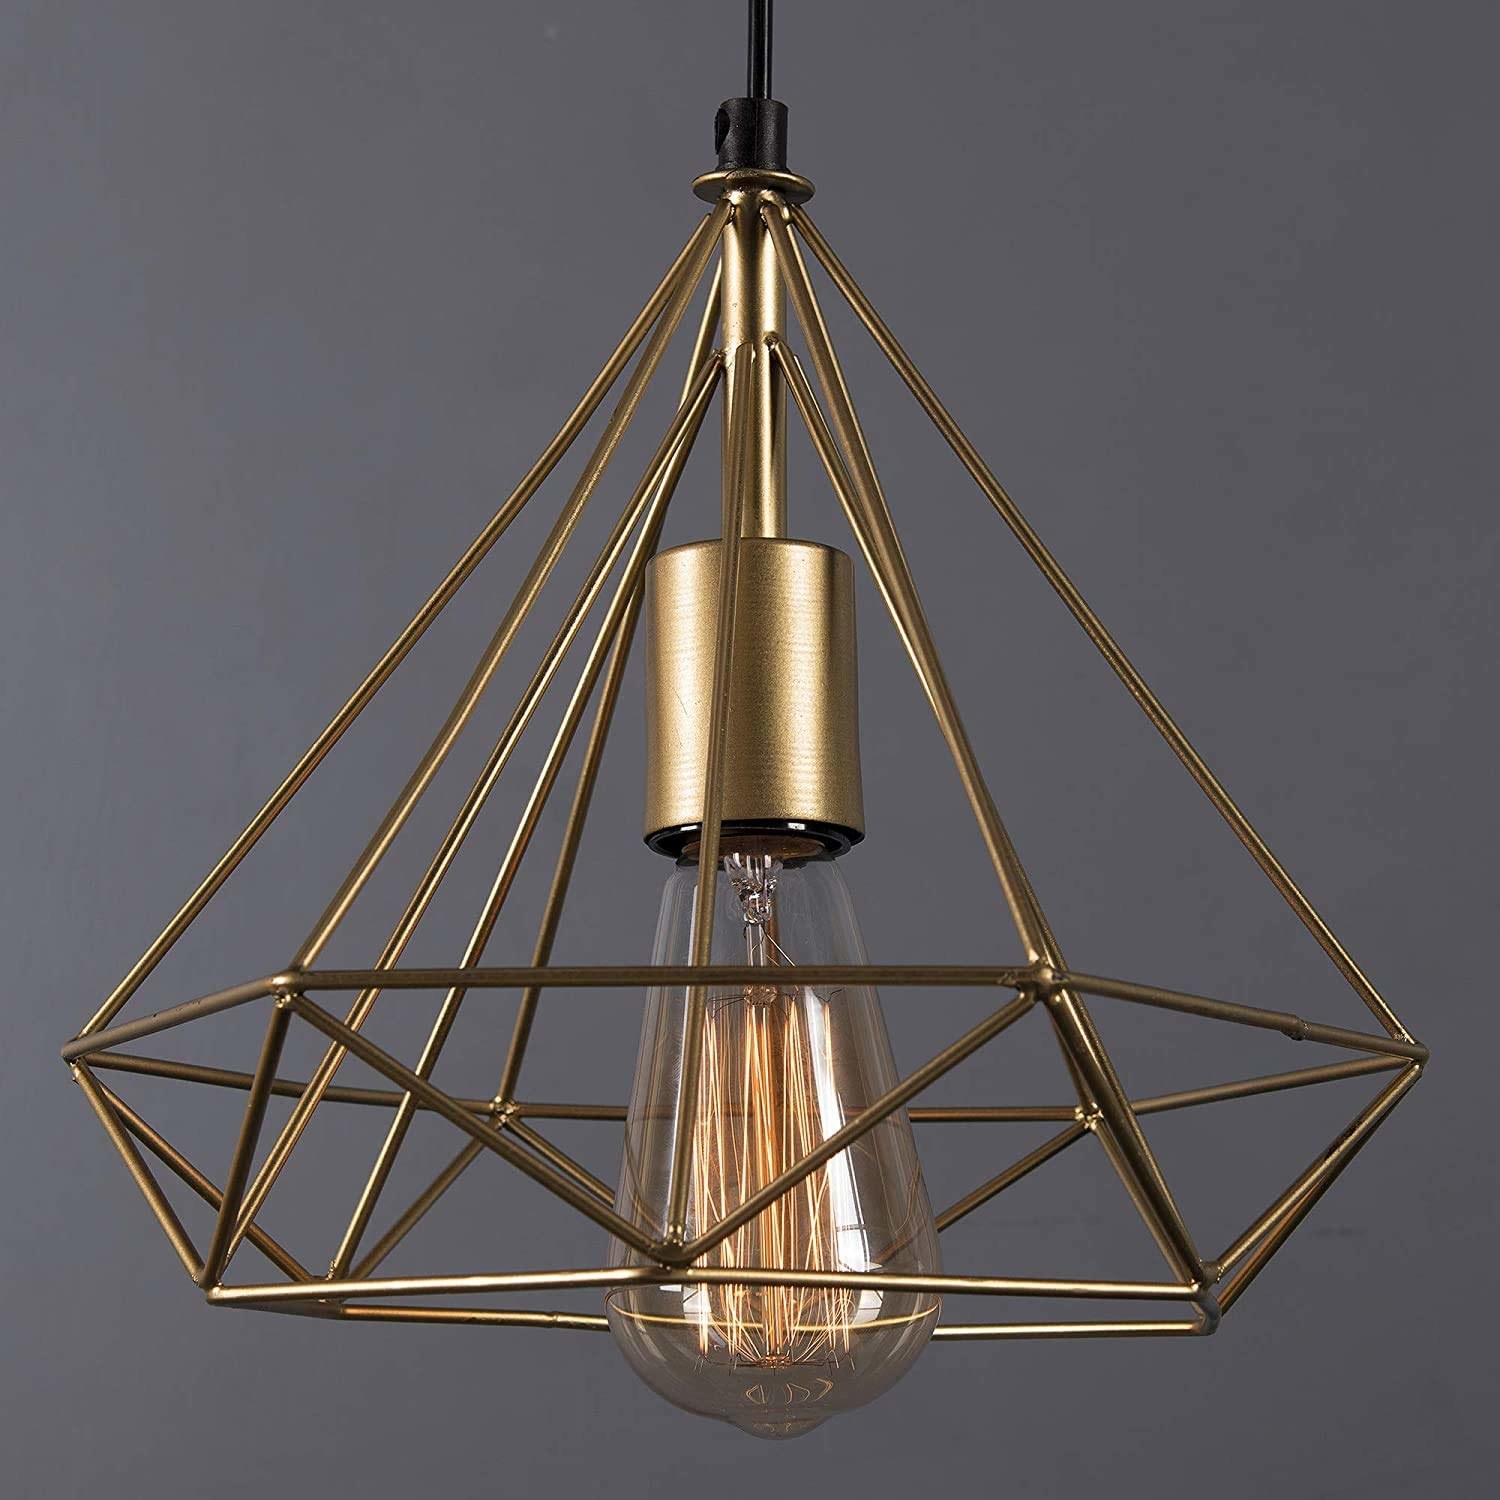 A golden pendant light with an Edison bulb.